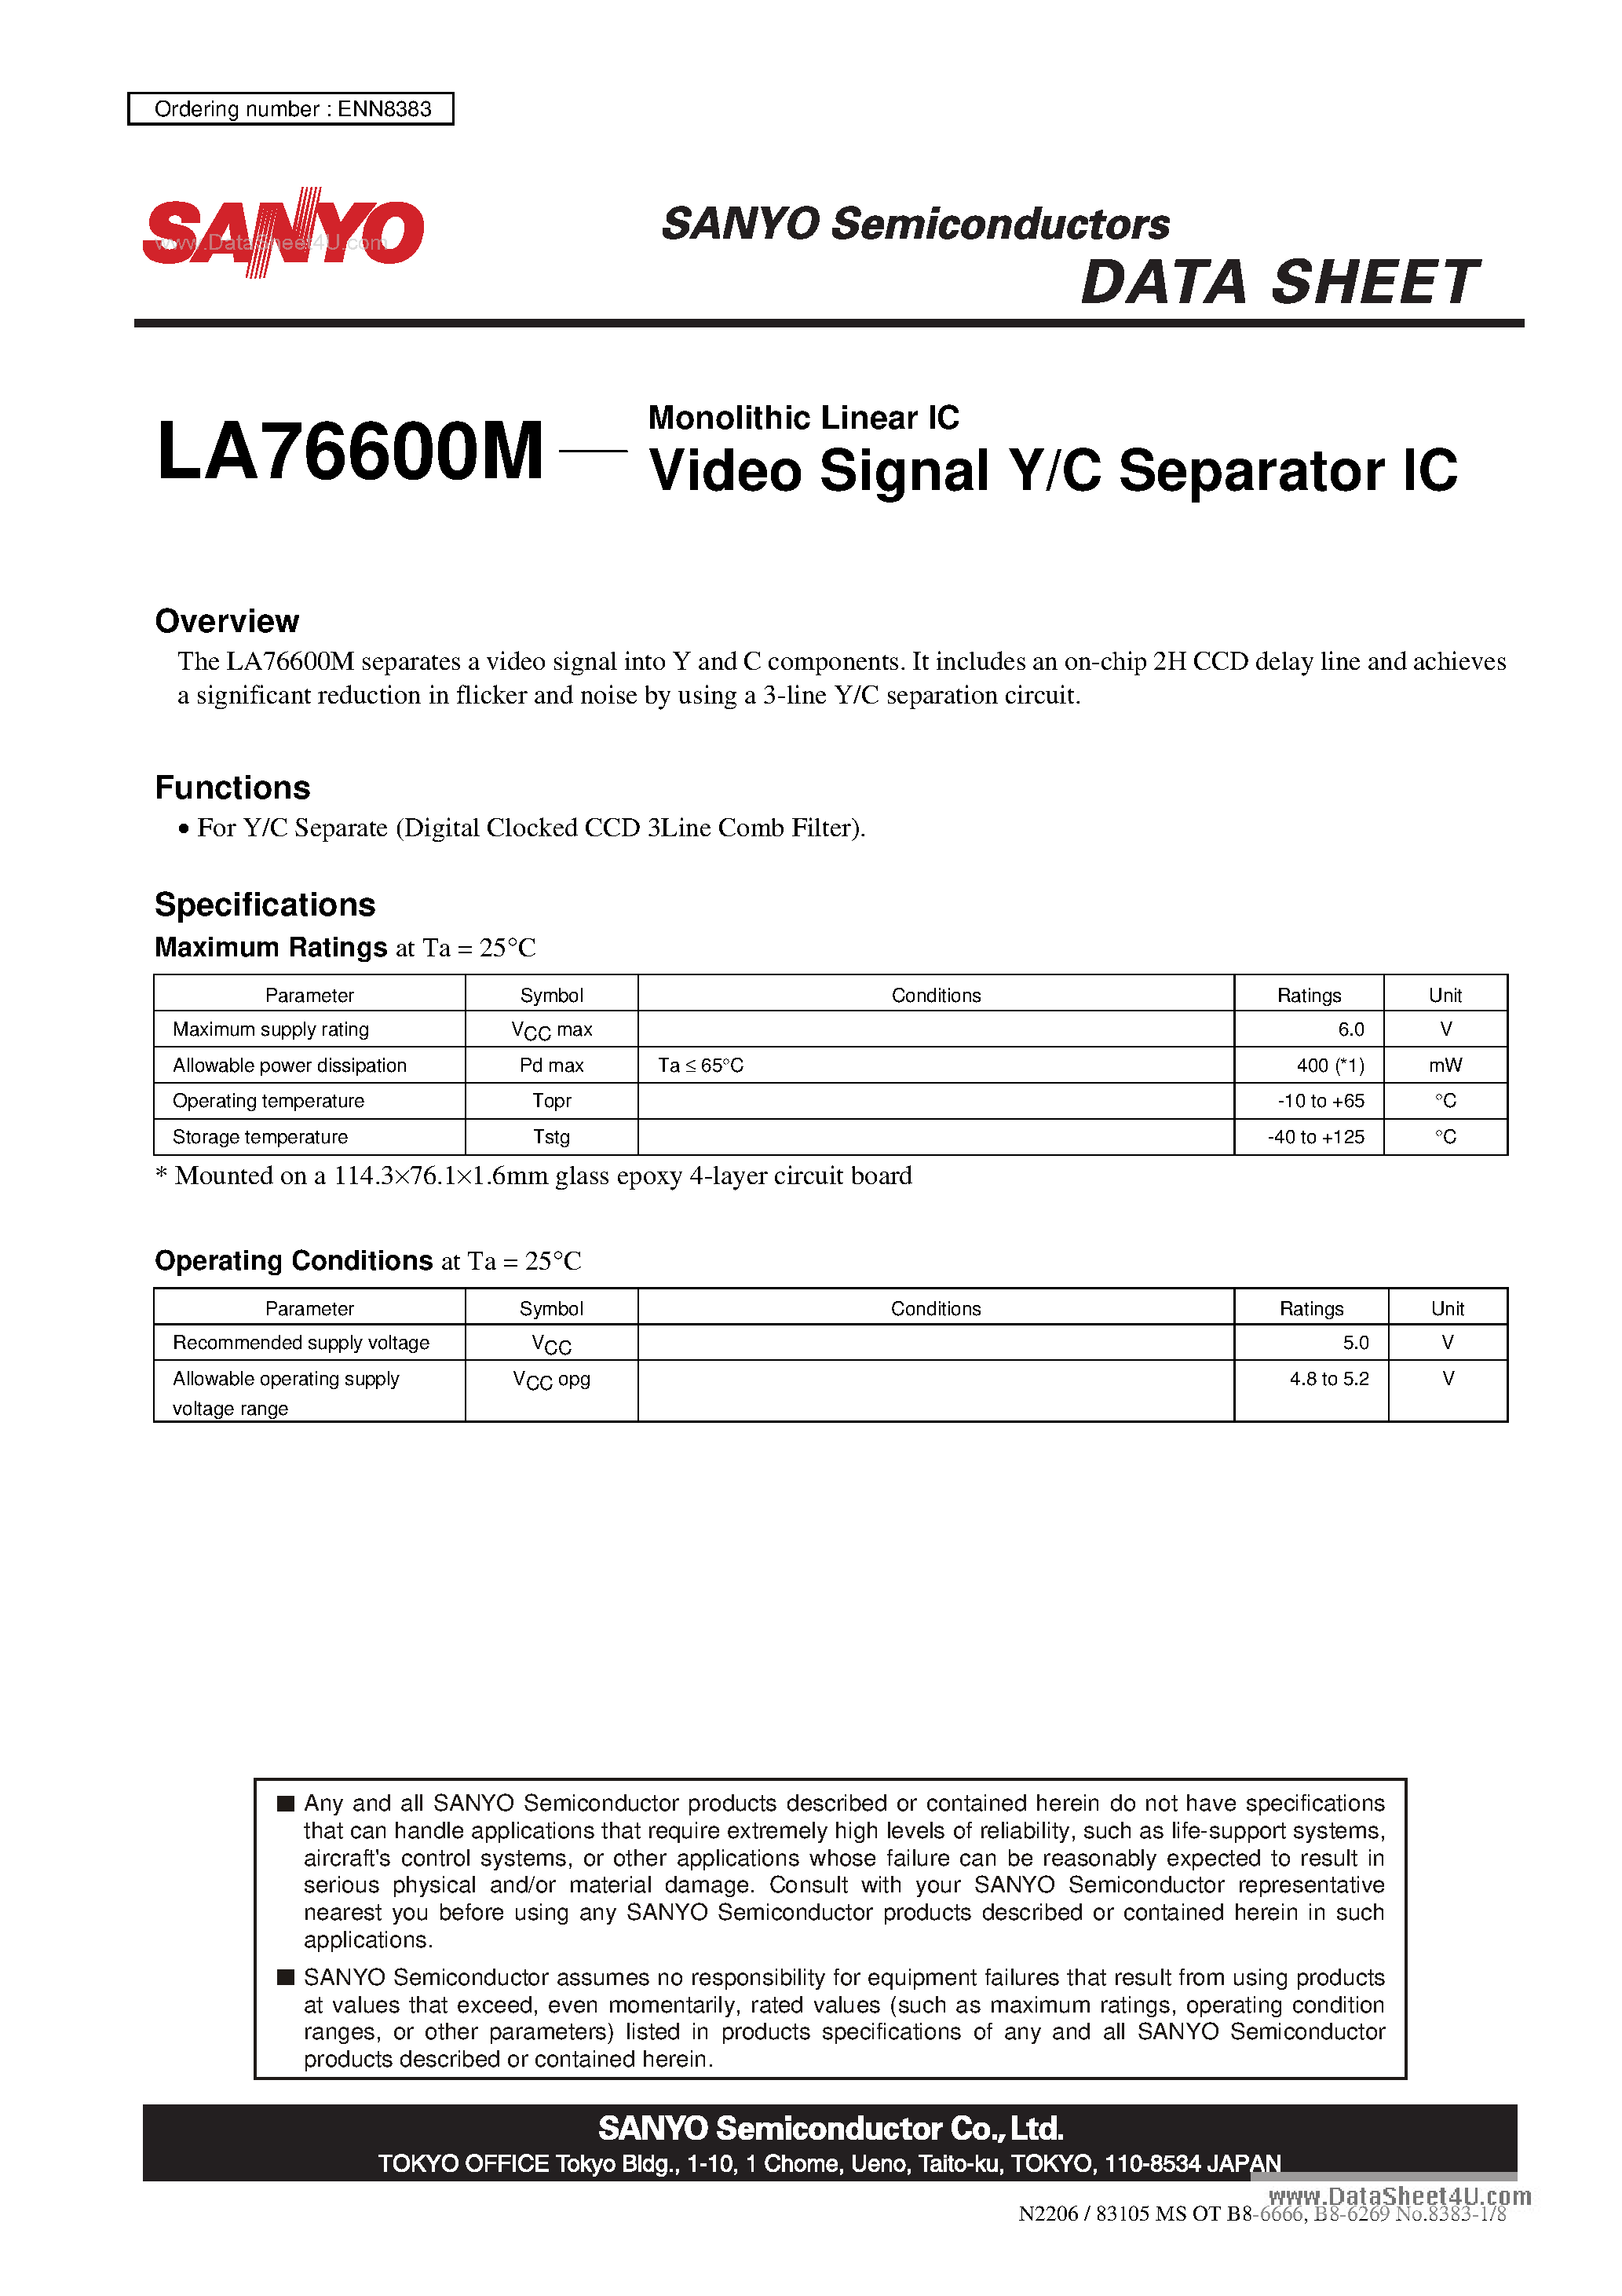 Даташит LA76600M - Monolithic Linear IC Video Signal Y/C Separator IC страница 1